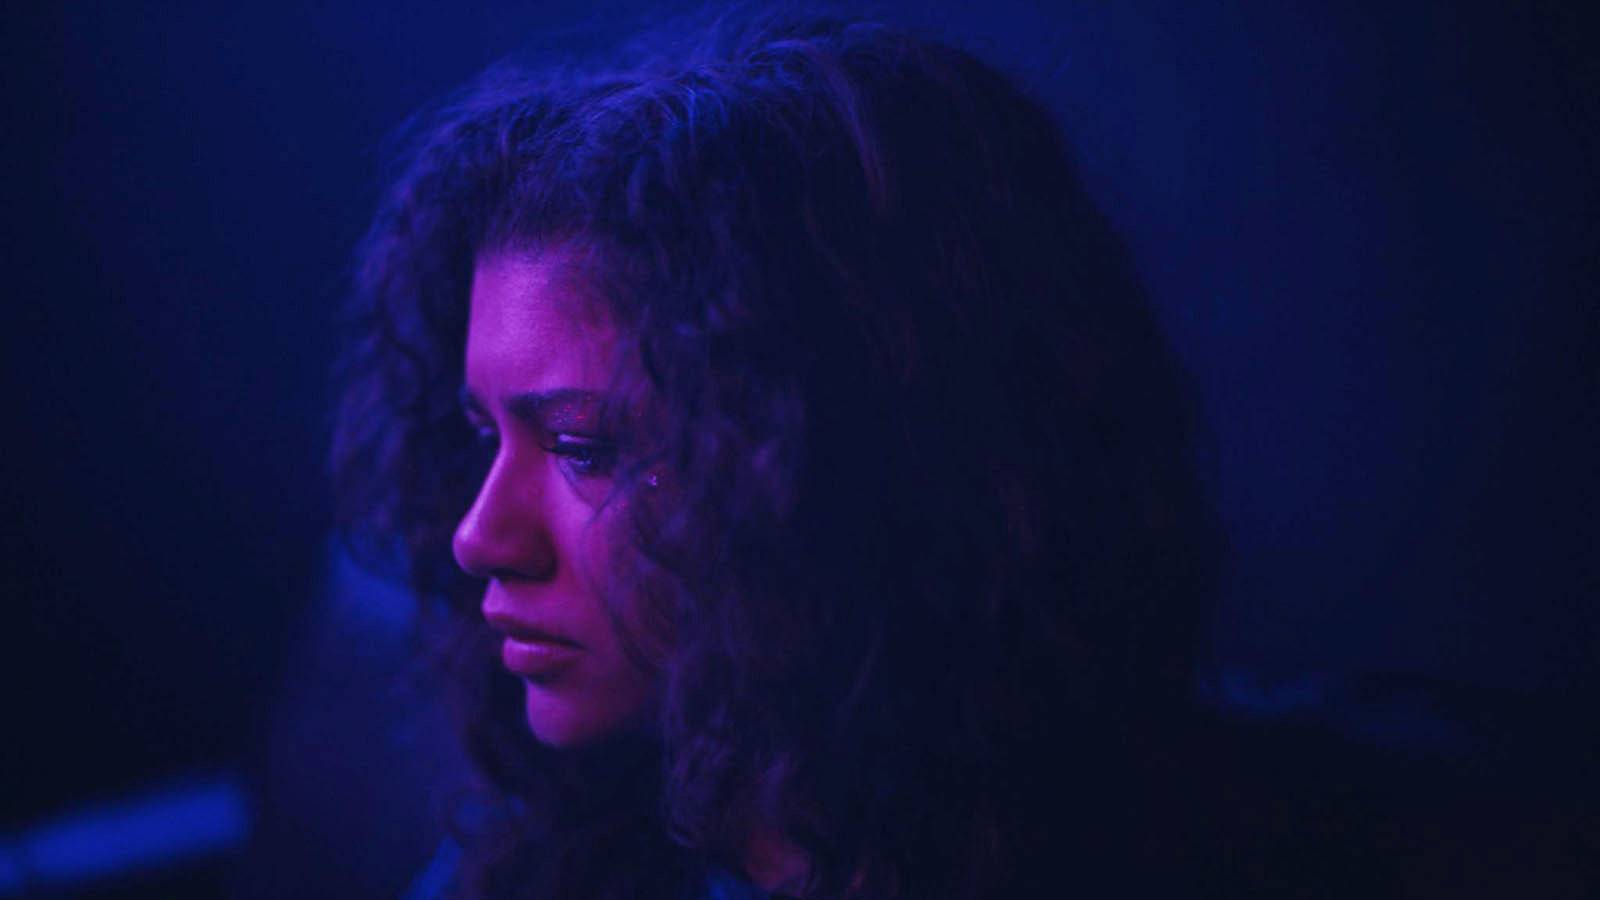 Zendaya dans la série "Euphoria" (depuis 2019) de Sam Levinson © HBO